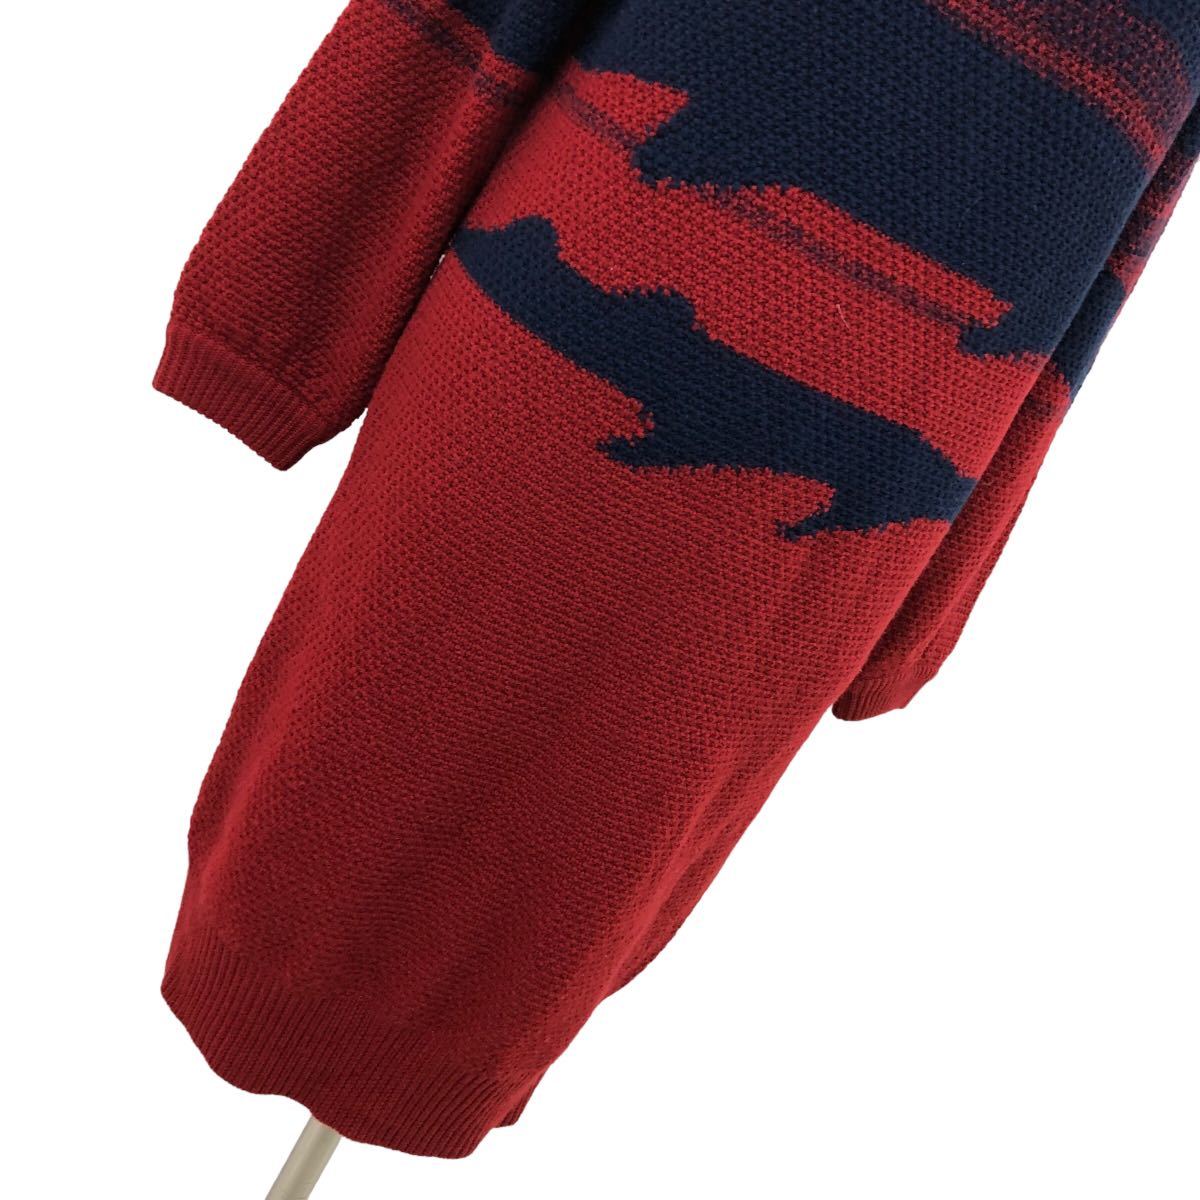 S183 TSUMORI CHISATO Tsumori Chisato knitted One-piece One-piece long sleeve One-piece knitted wool 100% lady's 2 navy navy blue red red 